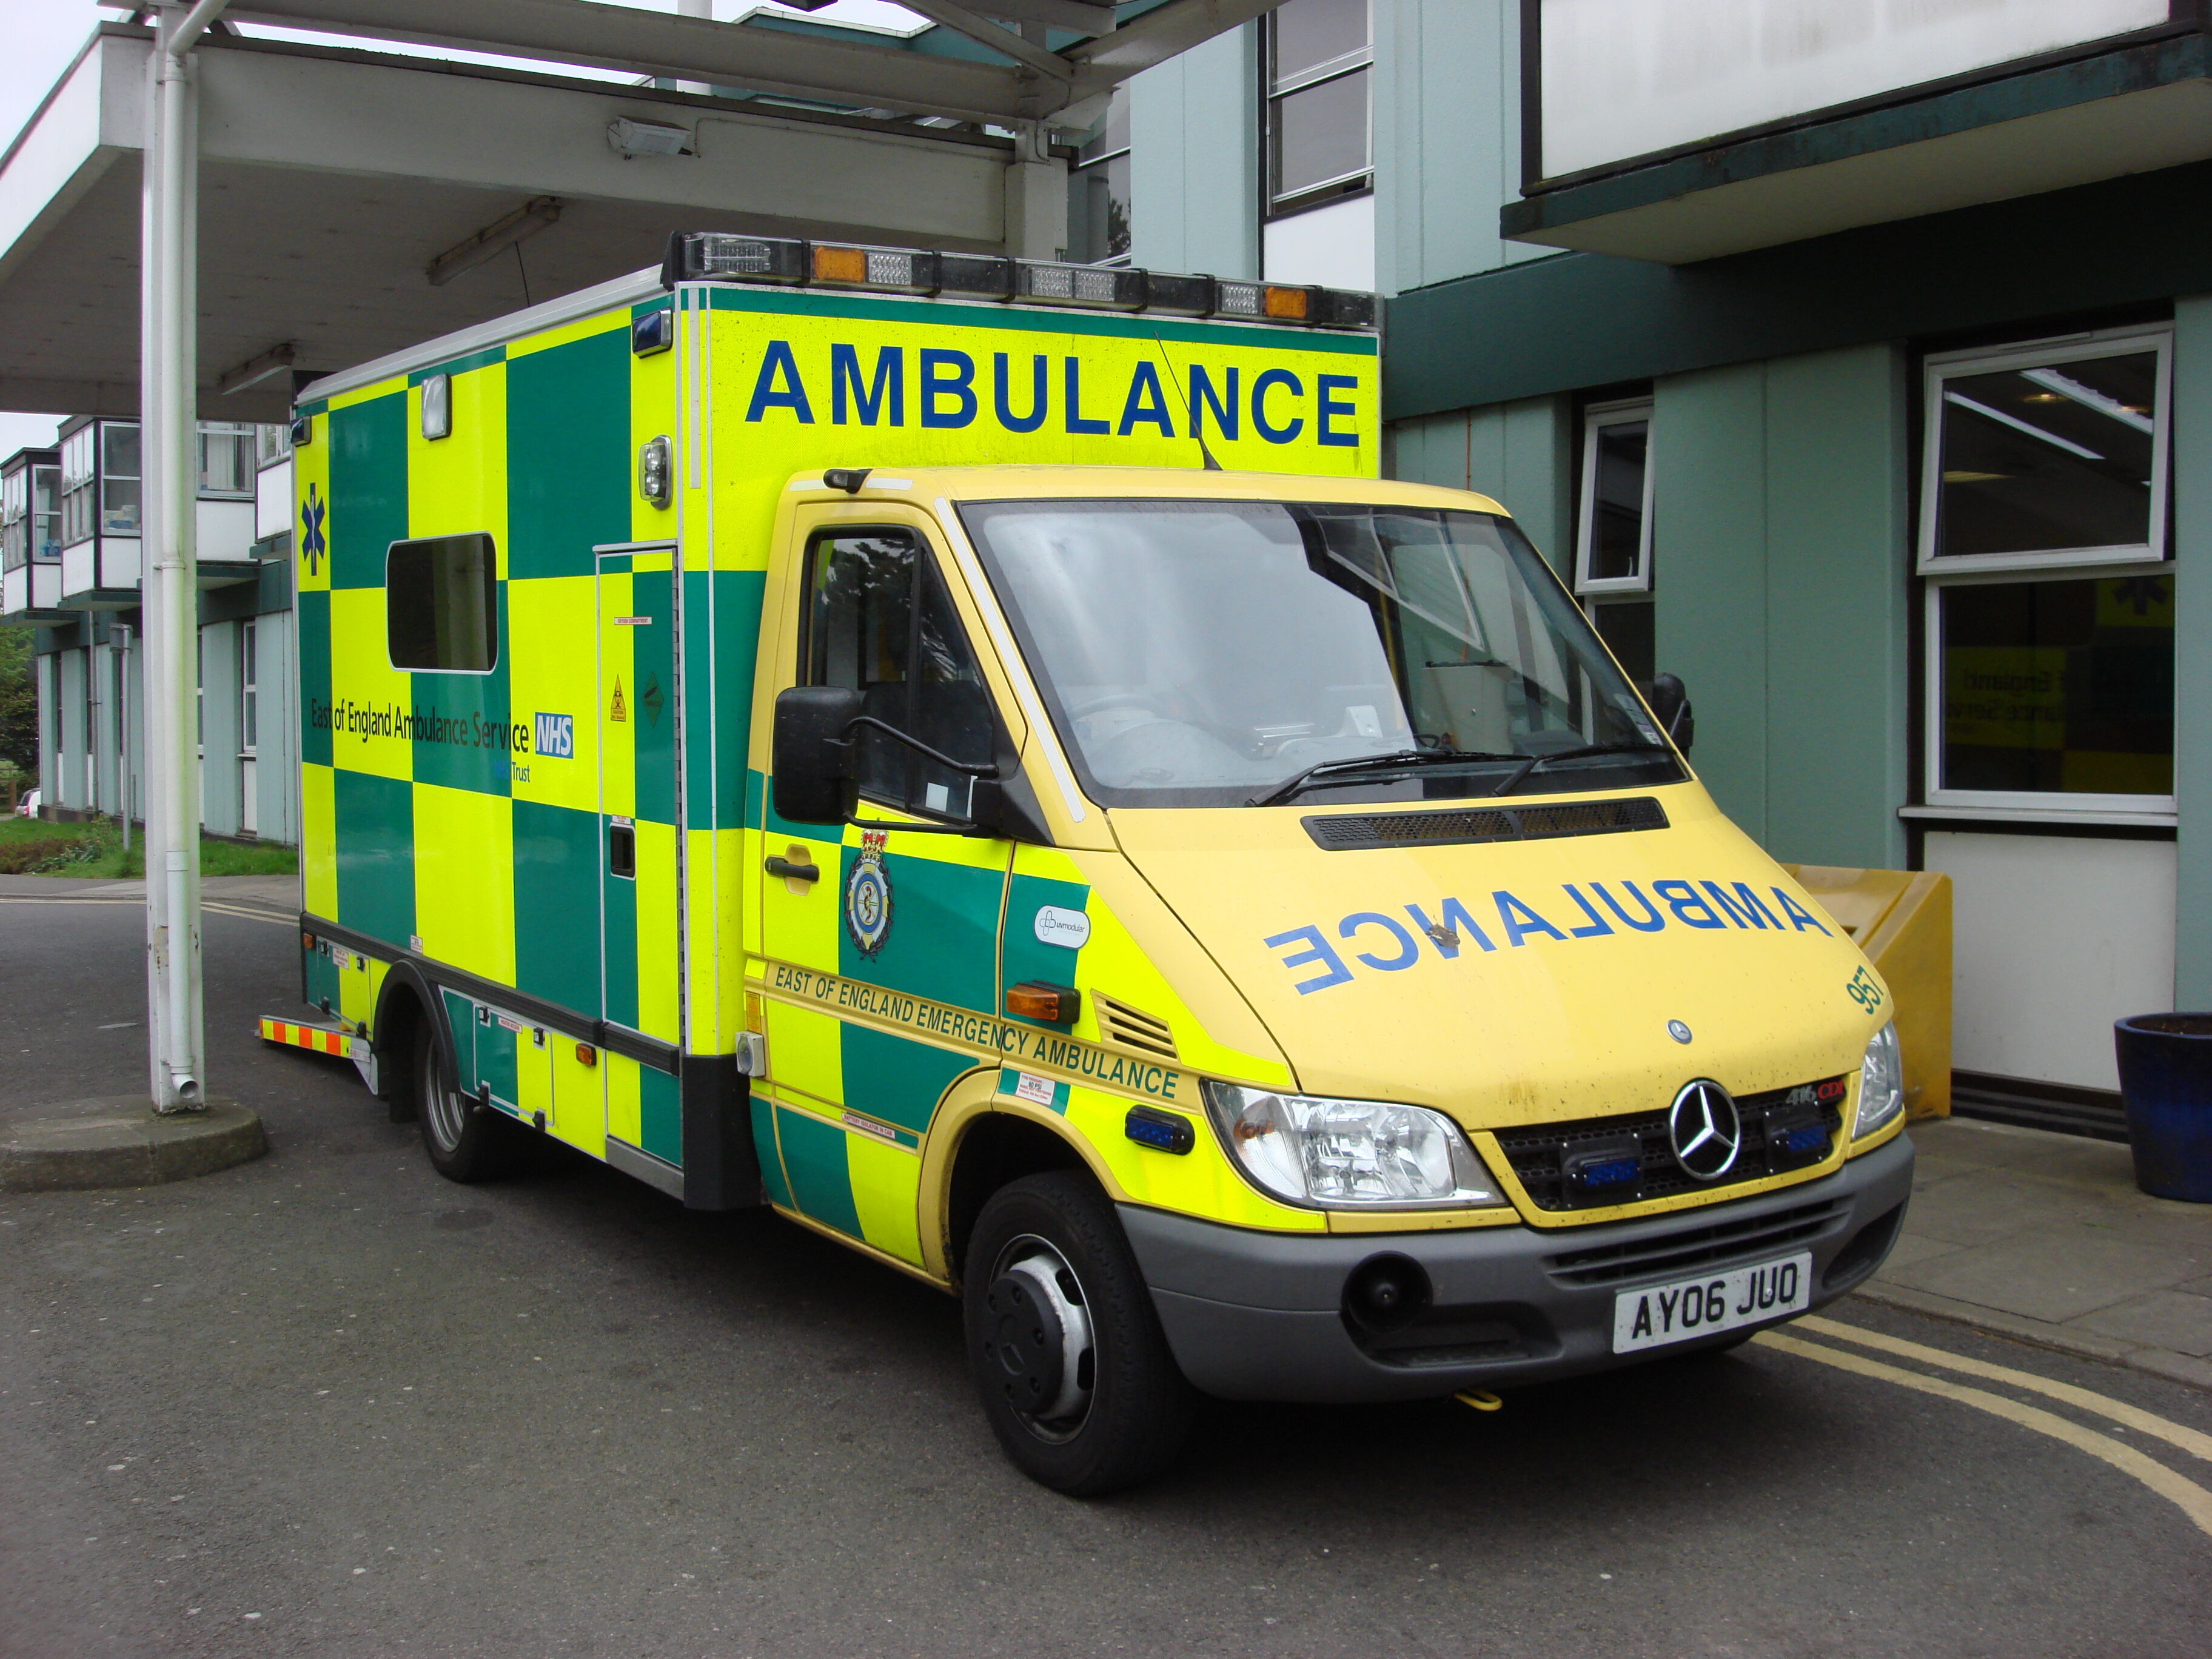 Ambulance, Public Safety Wiki